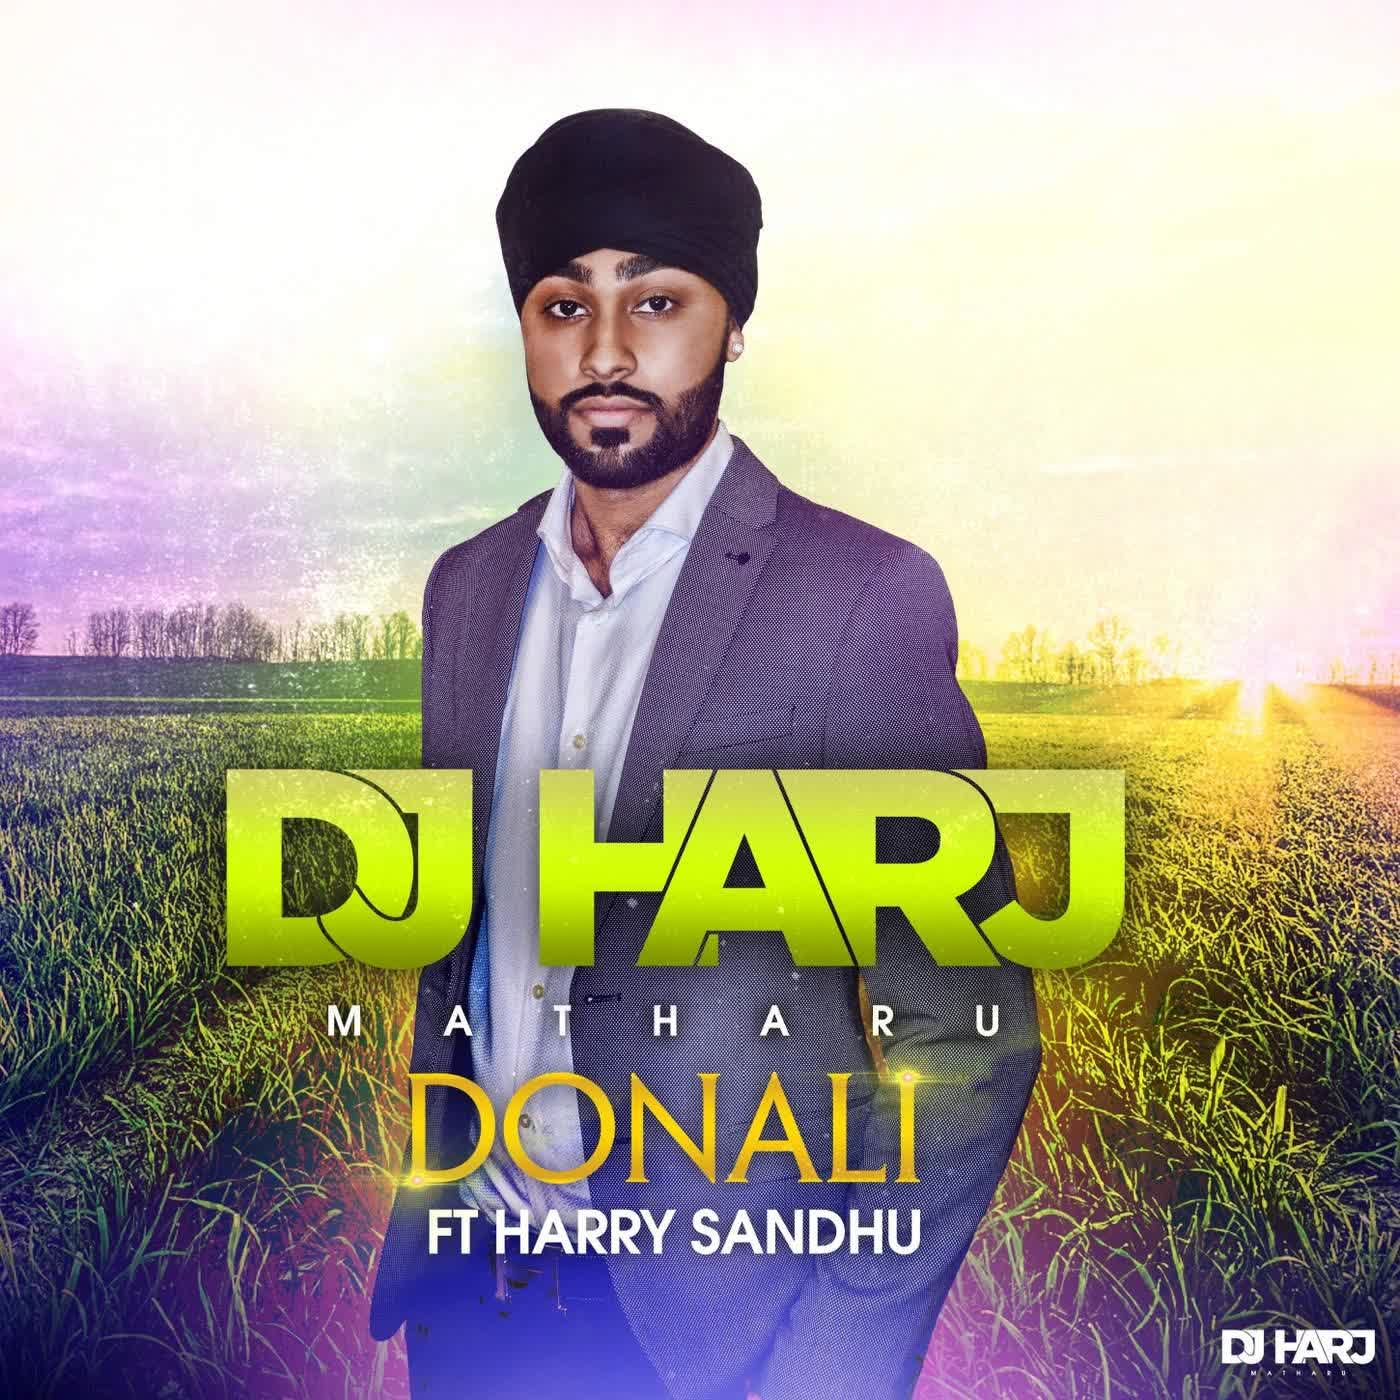 Donali Harry Sandhu  Mp3 song download